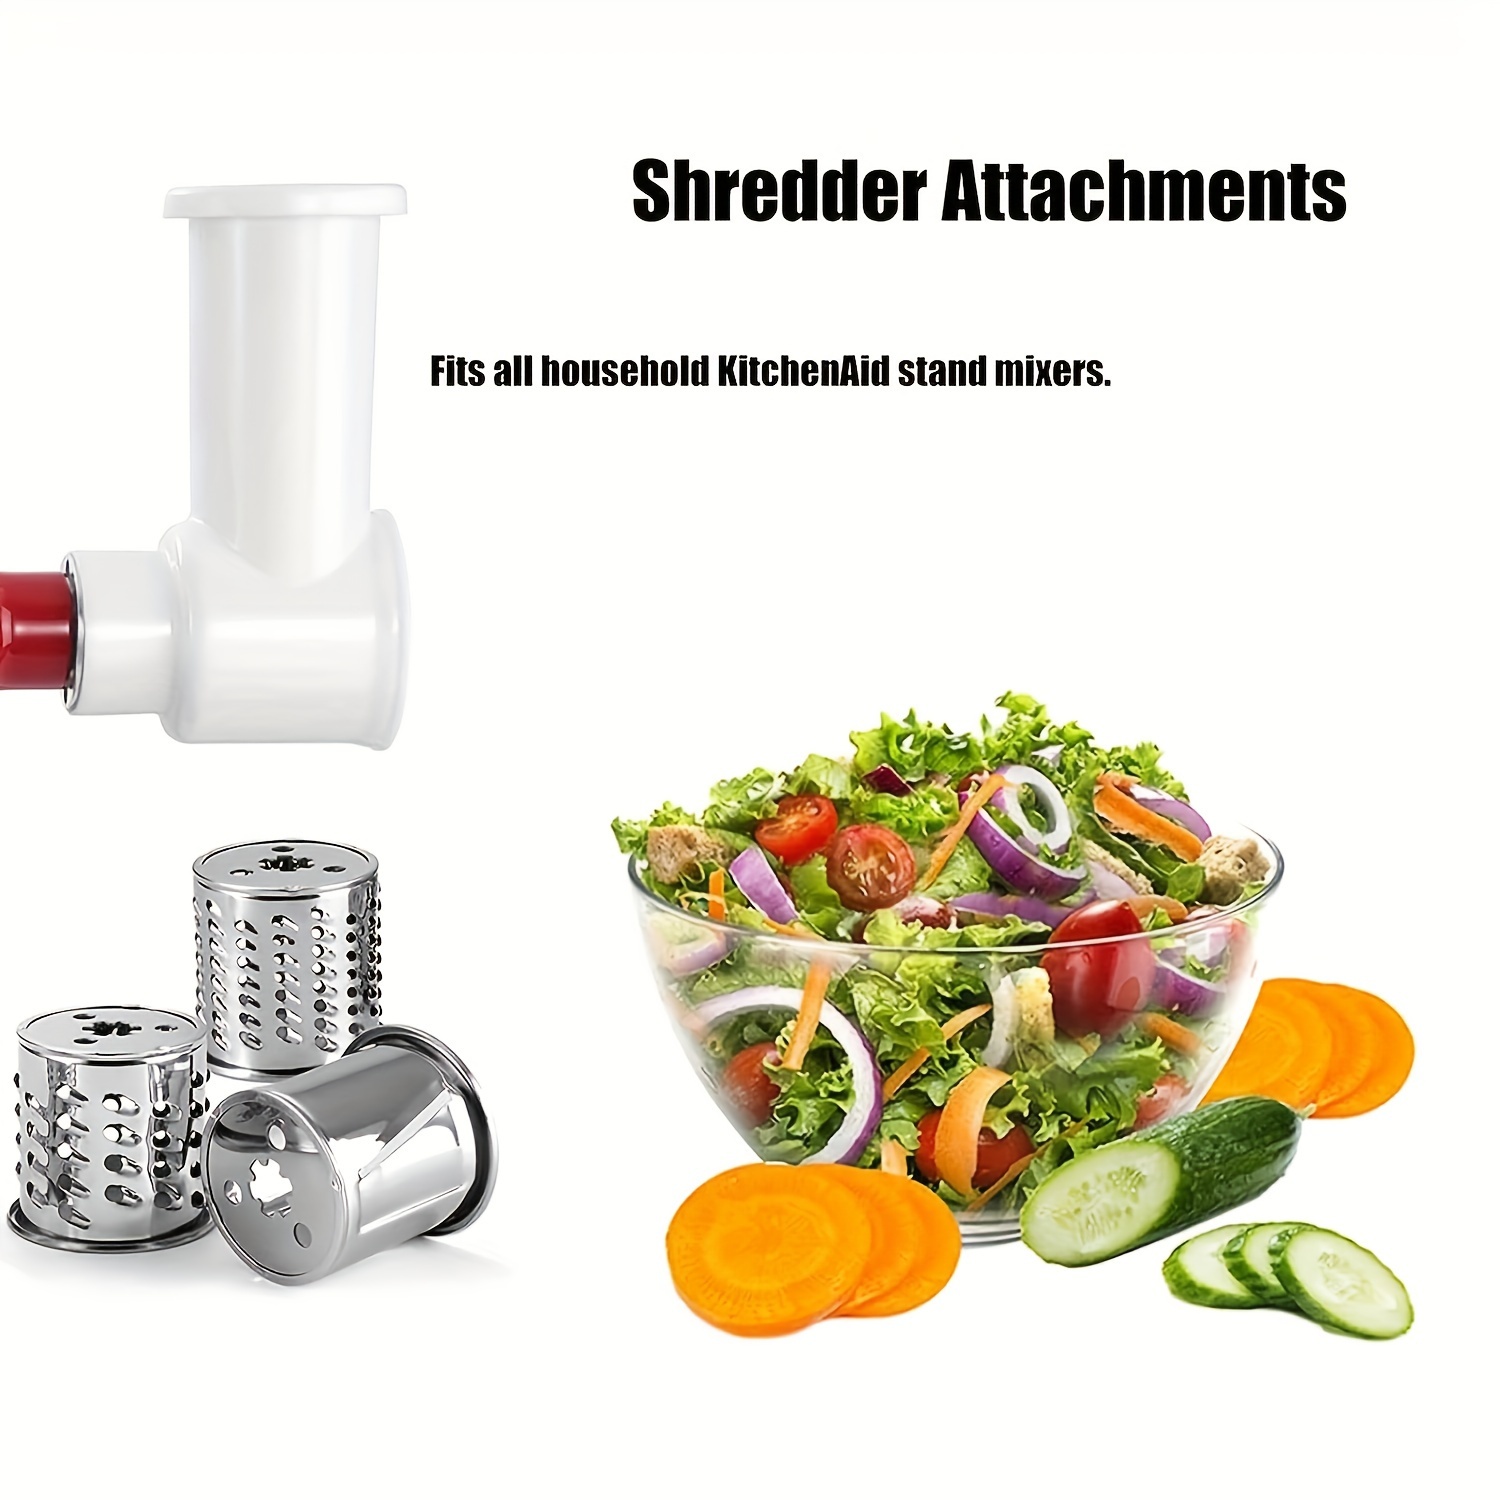 Slicer/Shredder Attachment fits KitchenAid Stand Mixer,Vegetable